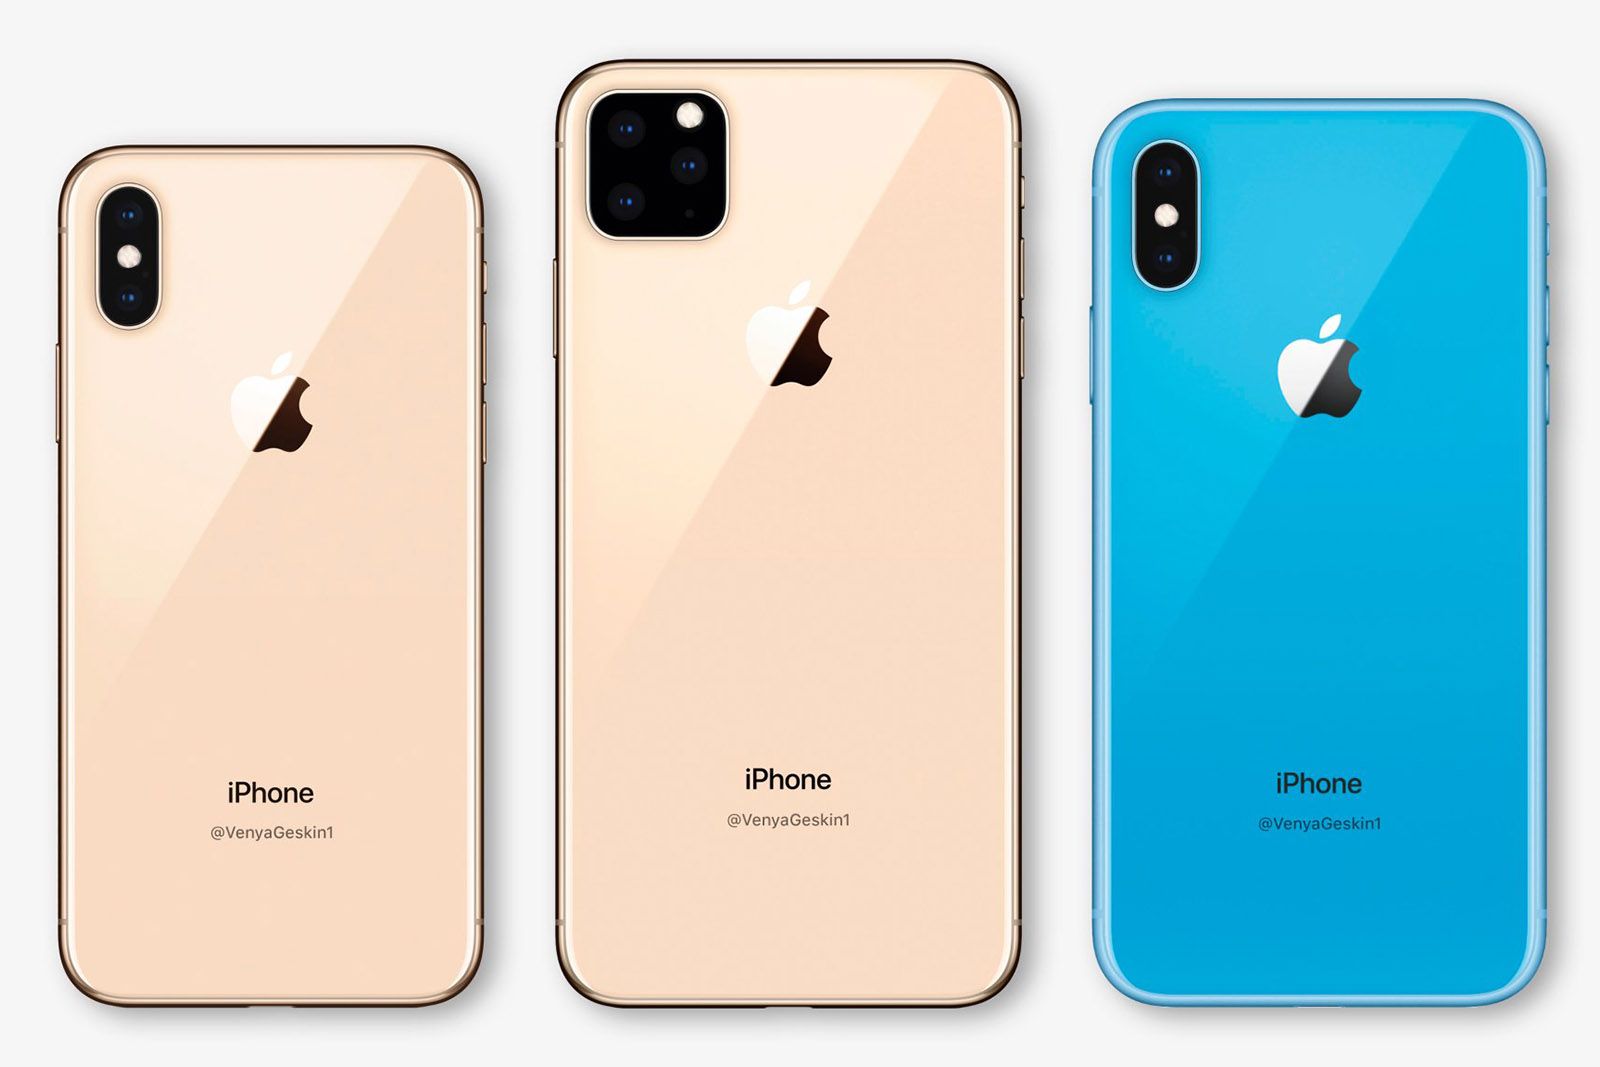 Apple iPhone XI Max will lead three new iPhones in 2019 despite bad sales image 1